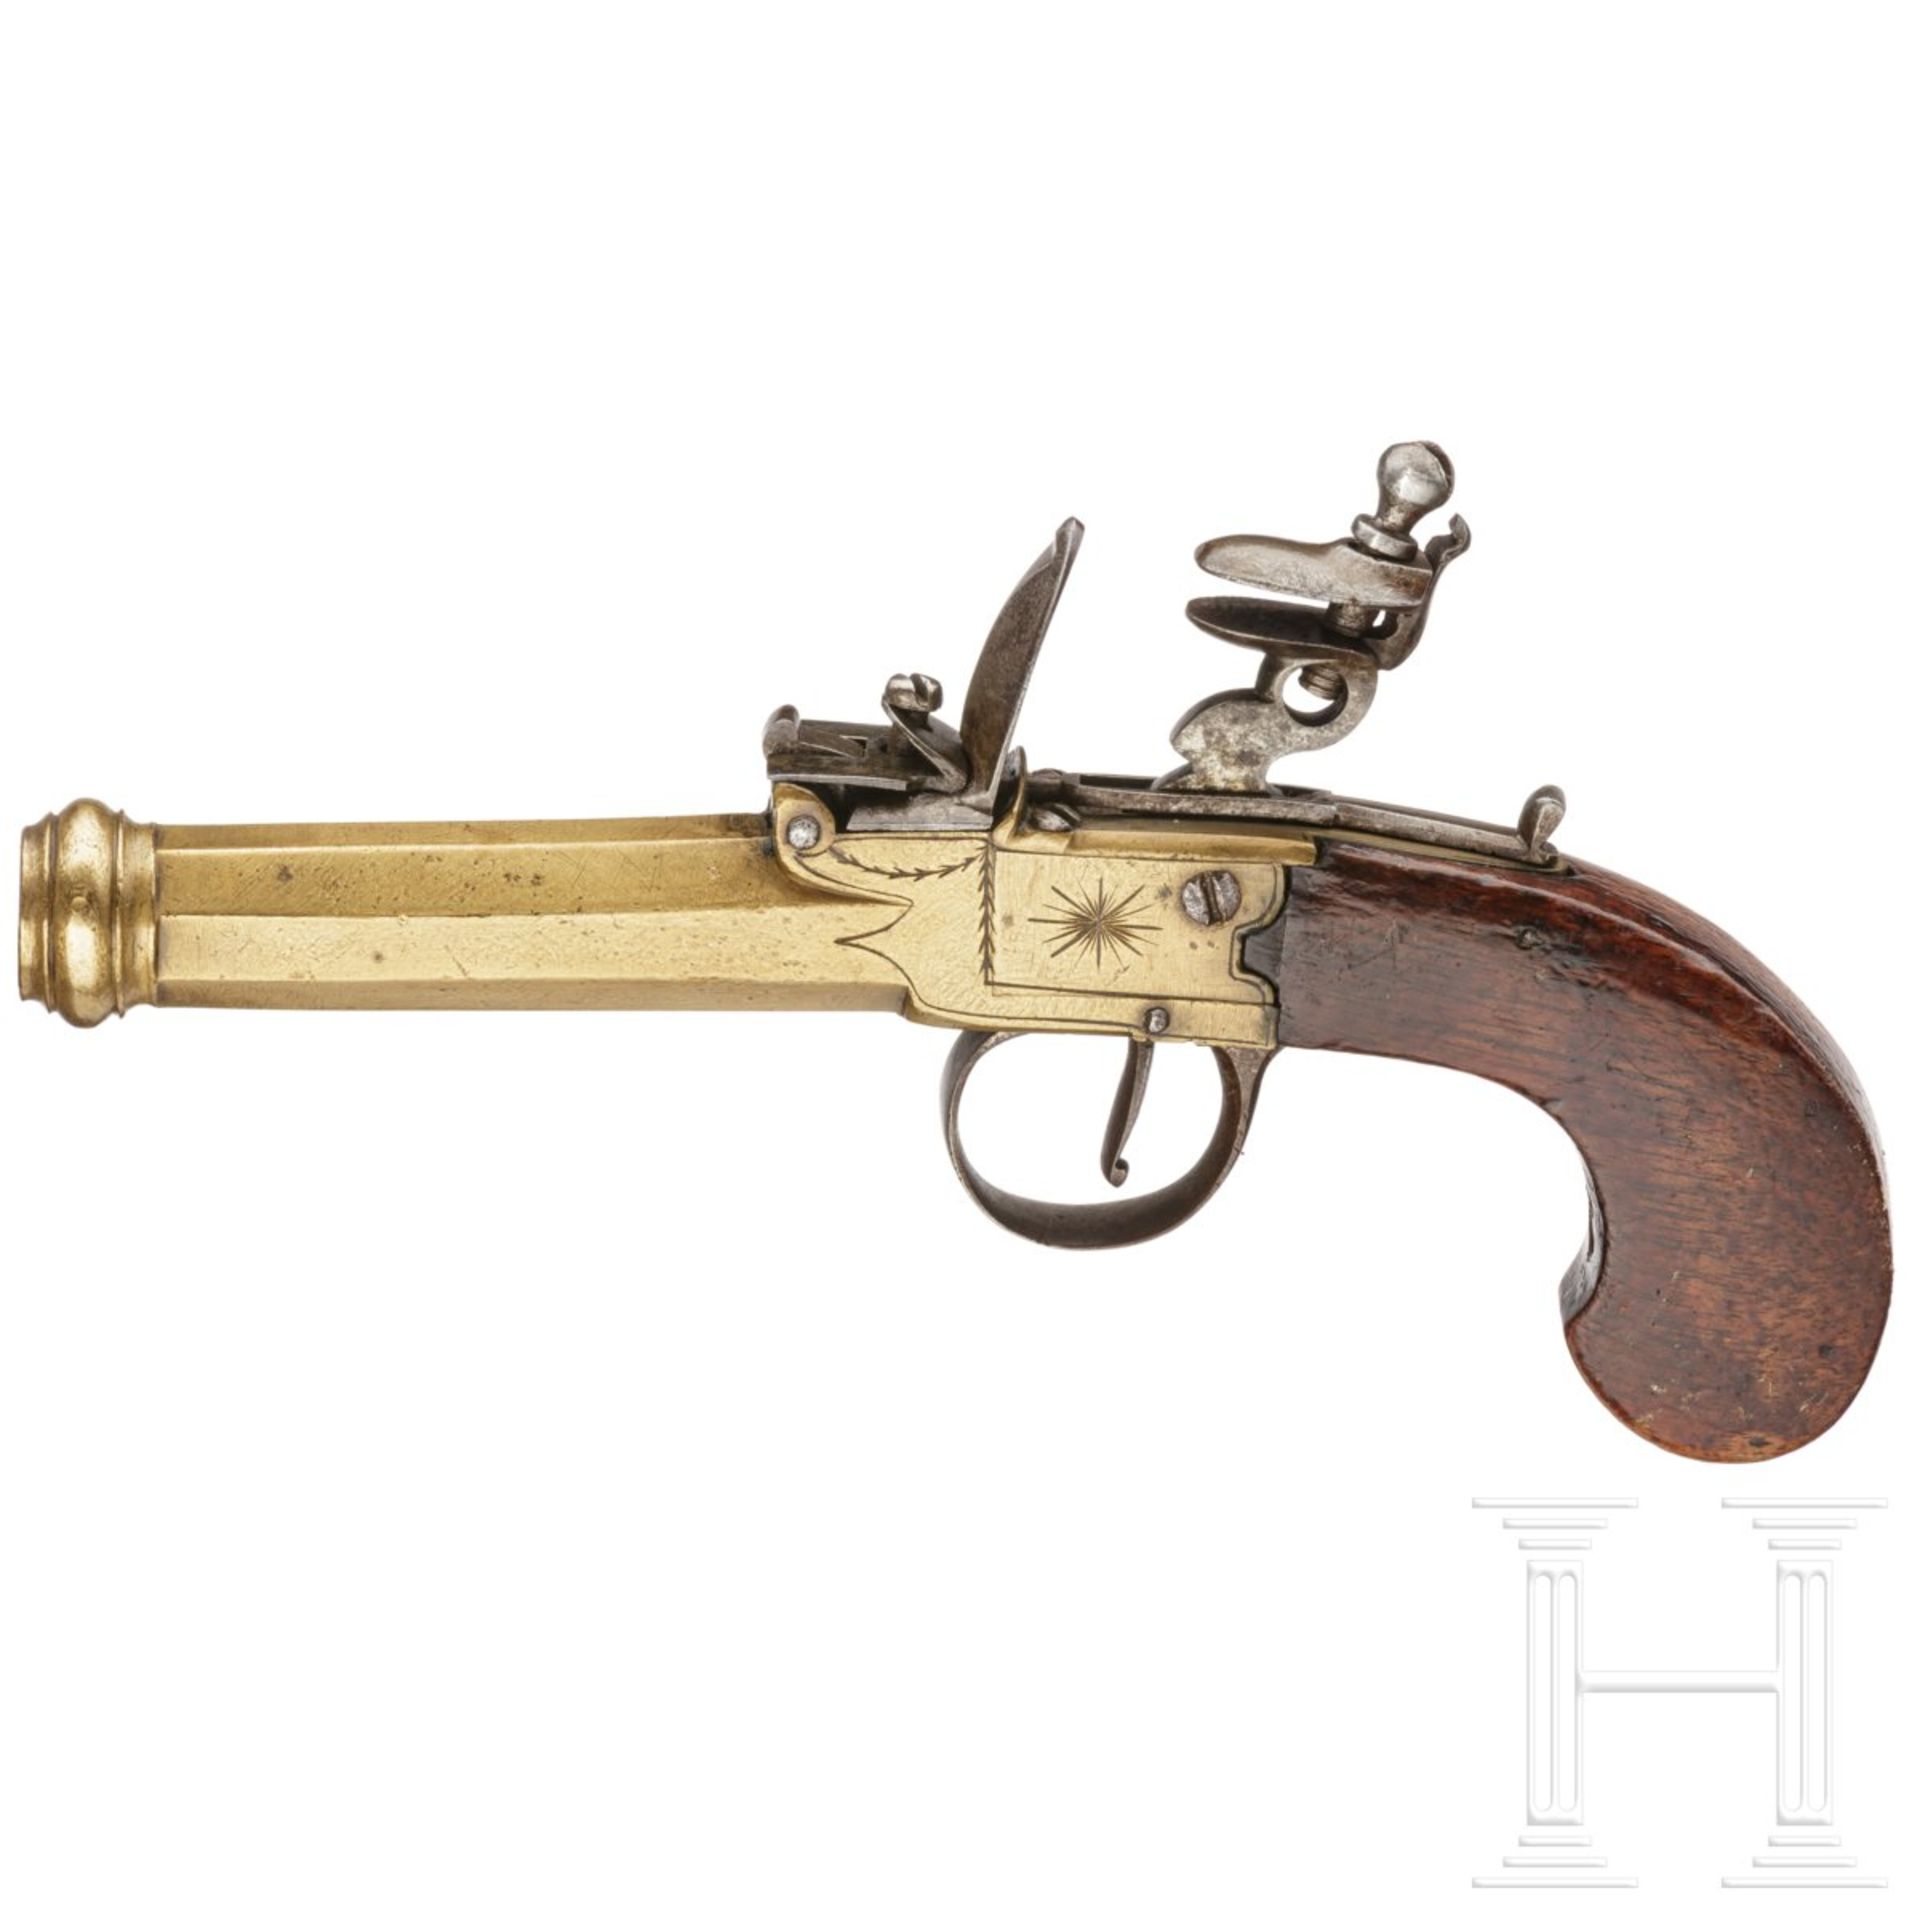 Steinschloss-Reisepistole aus Messing, Belgien, um 1800 - Bild 2 aus 2